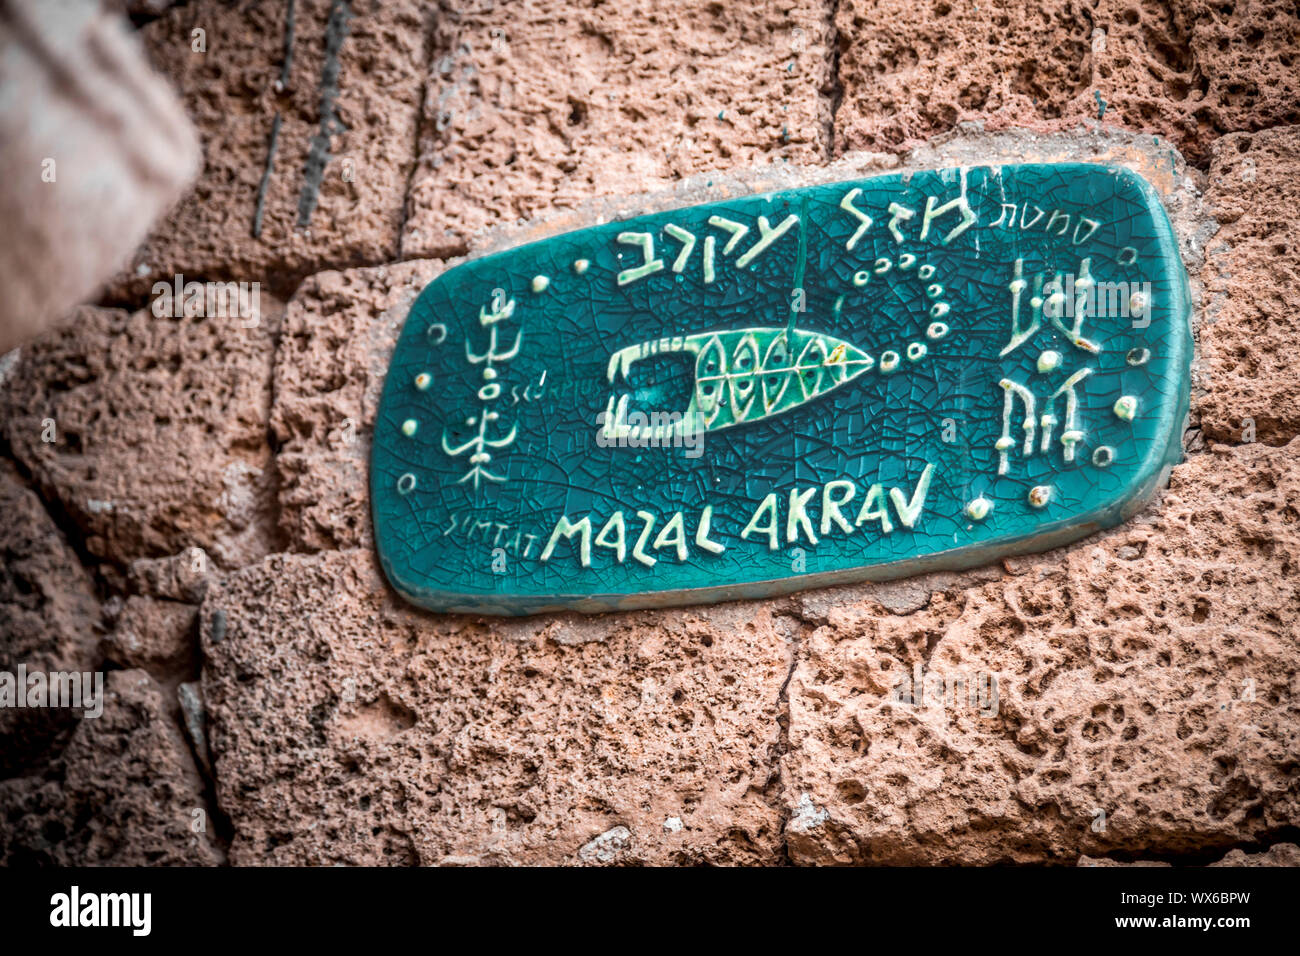 Street sign with horoscope signs in old city of Jaffa, Israel, Mazal Akrav - Scorpius Stock Photo